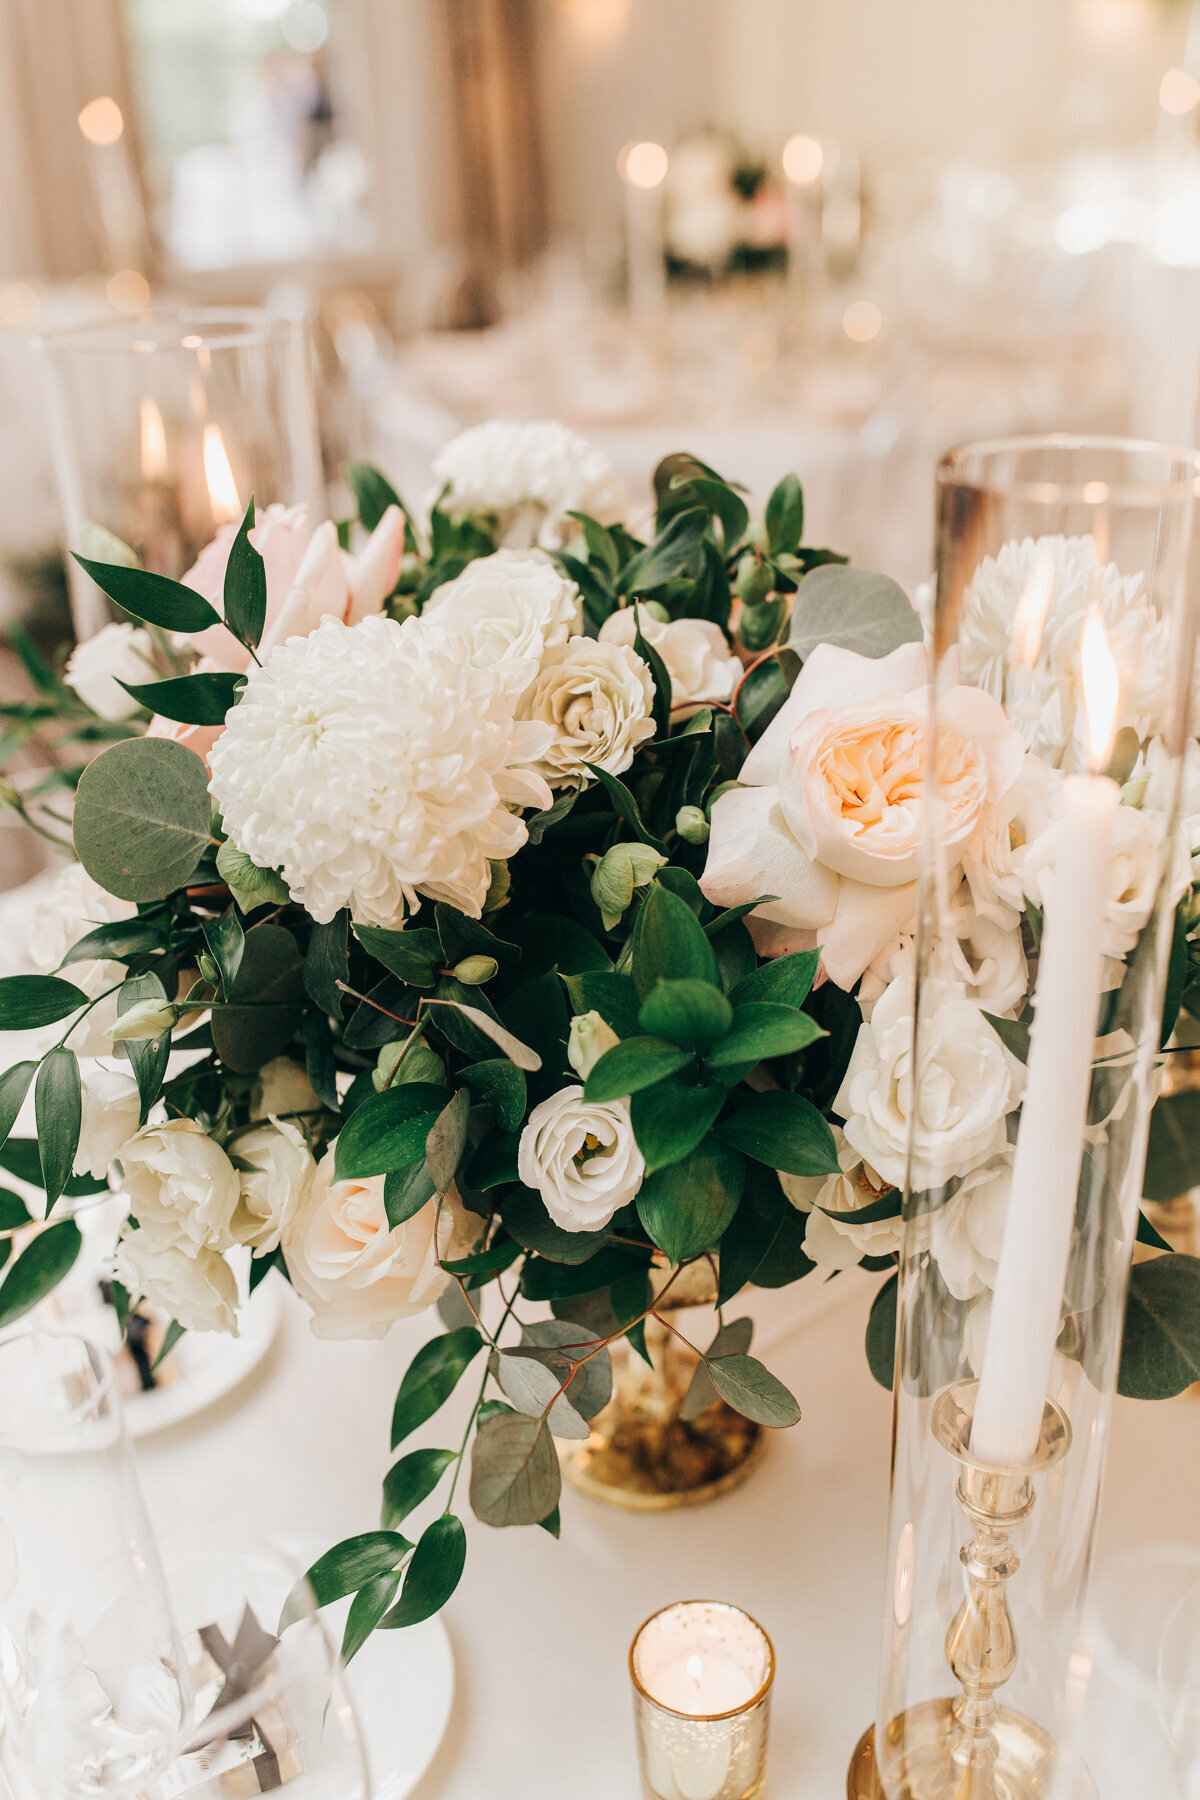 Rose, eucalyptus, and chrysanthemum wedding centrepieces